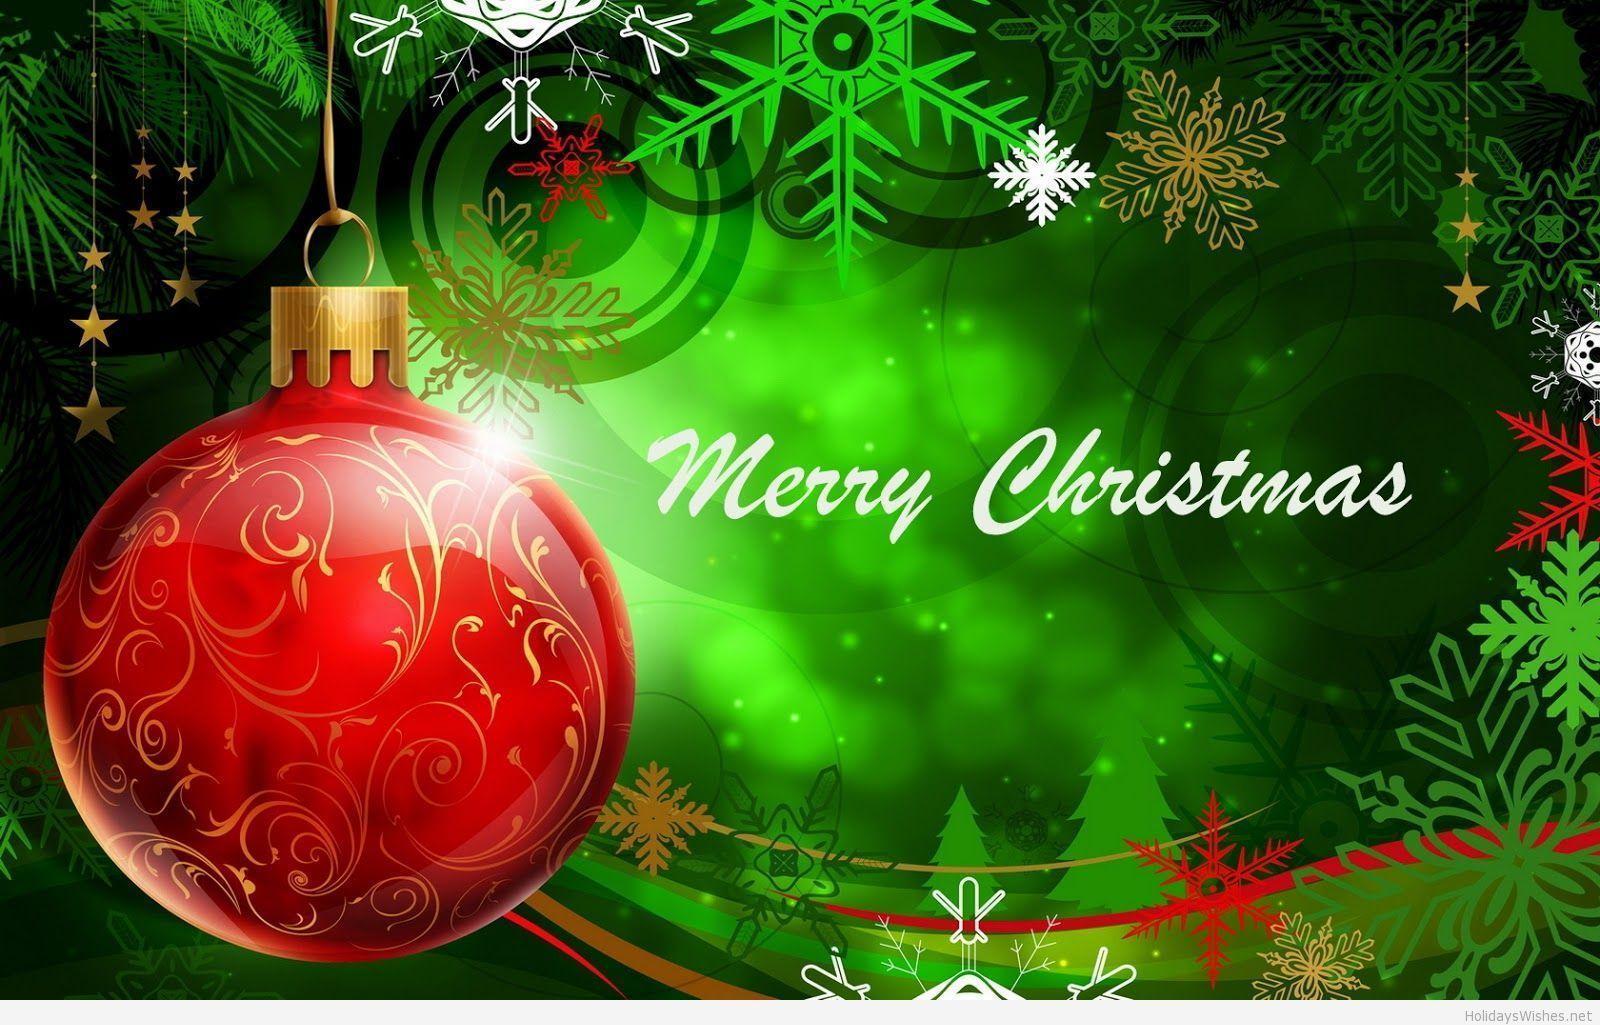 Merry Christmas Hd Wallpaper Download : Merry Christmas Tree Free ...